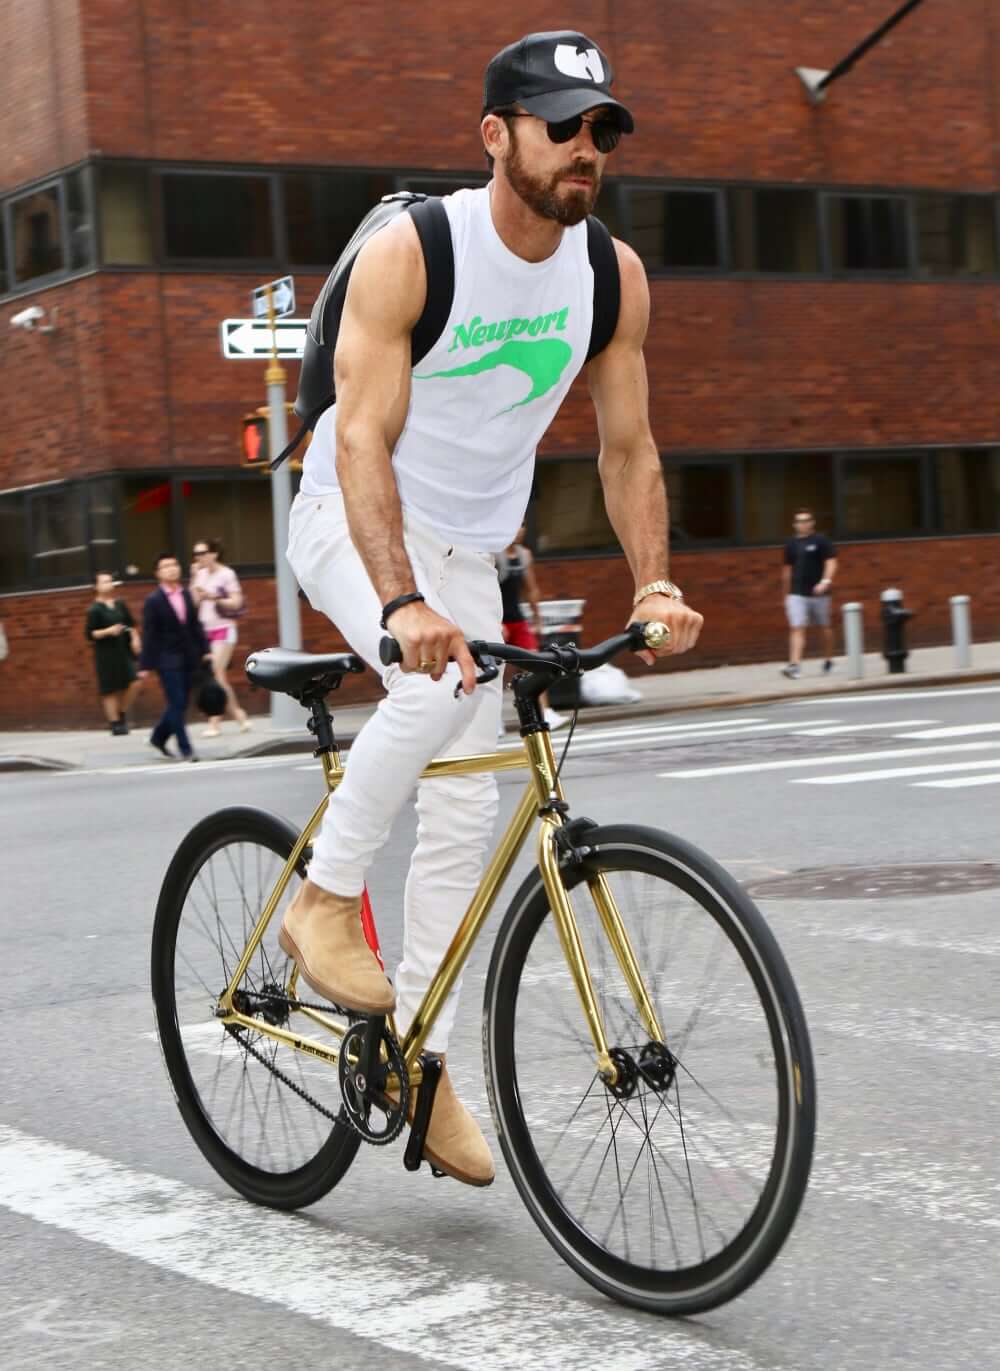 Justin Theroux biking in New York City